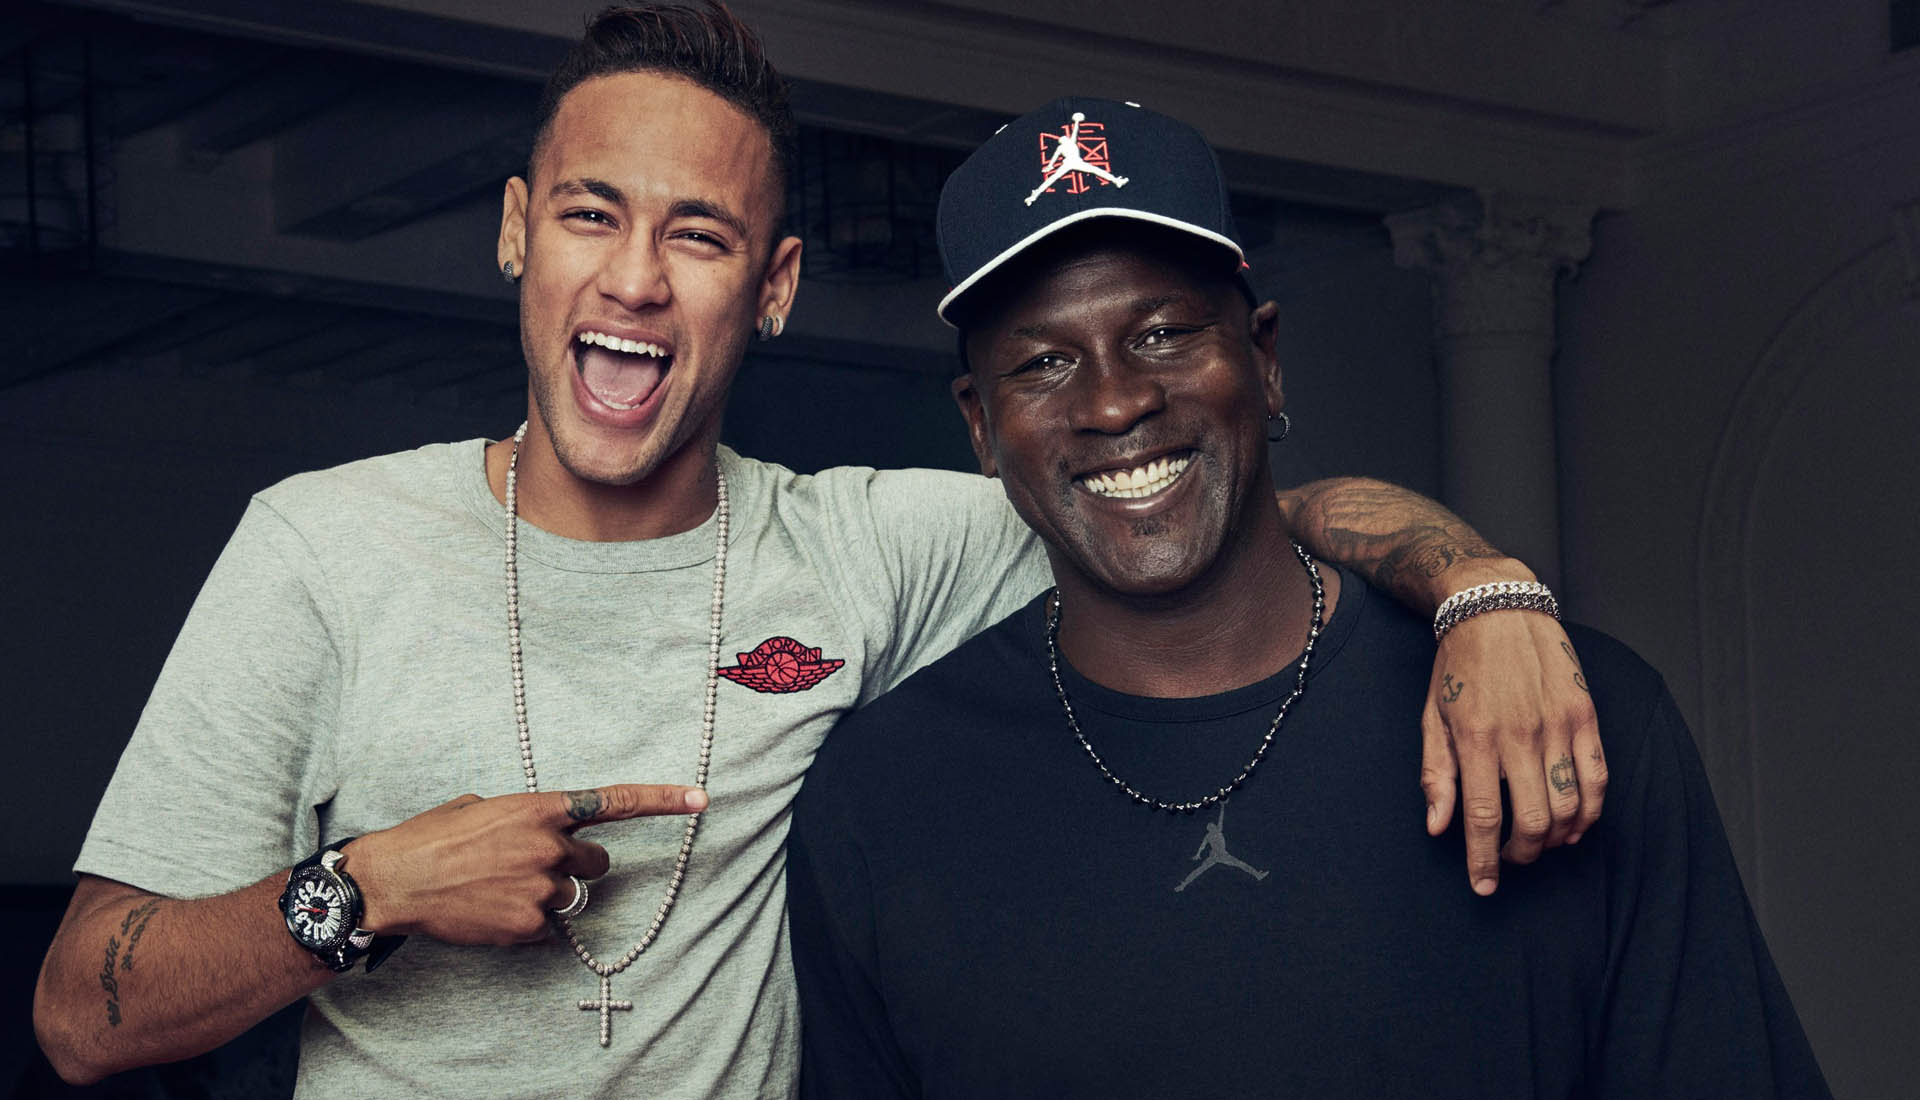 Neymar collaborated with Michael Jordan in 2016